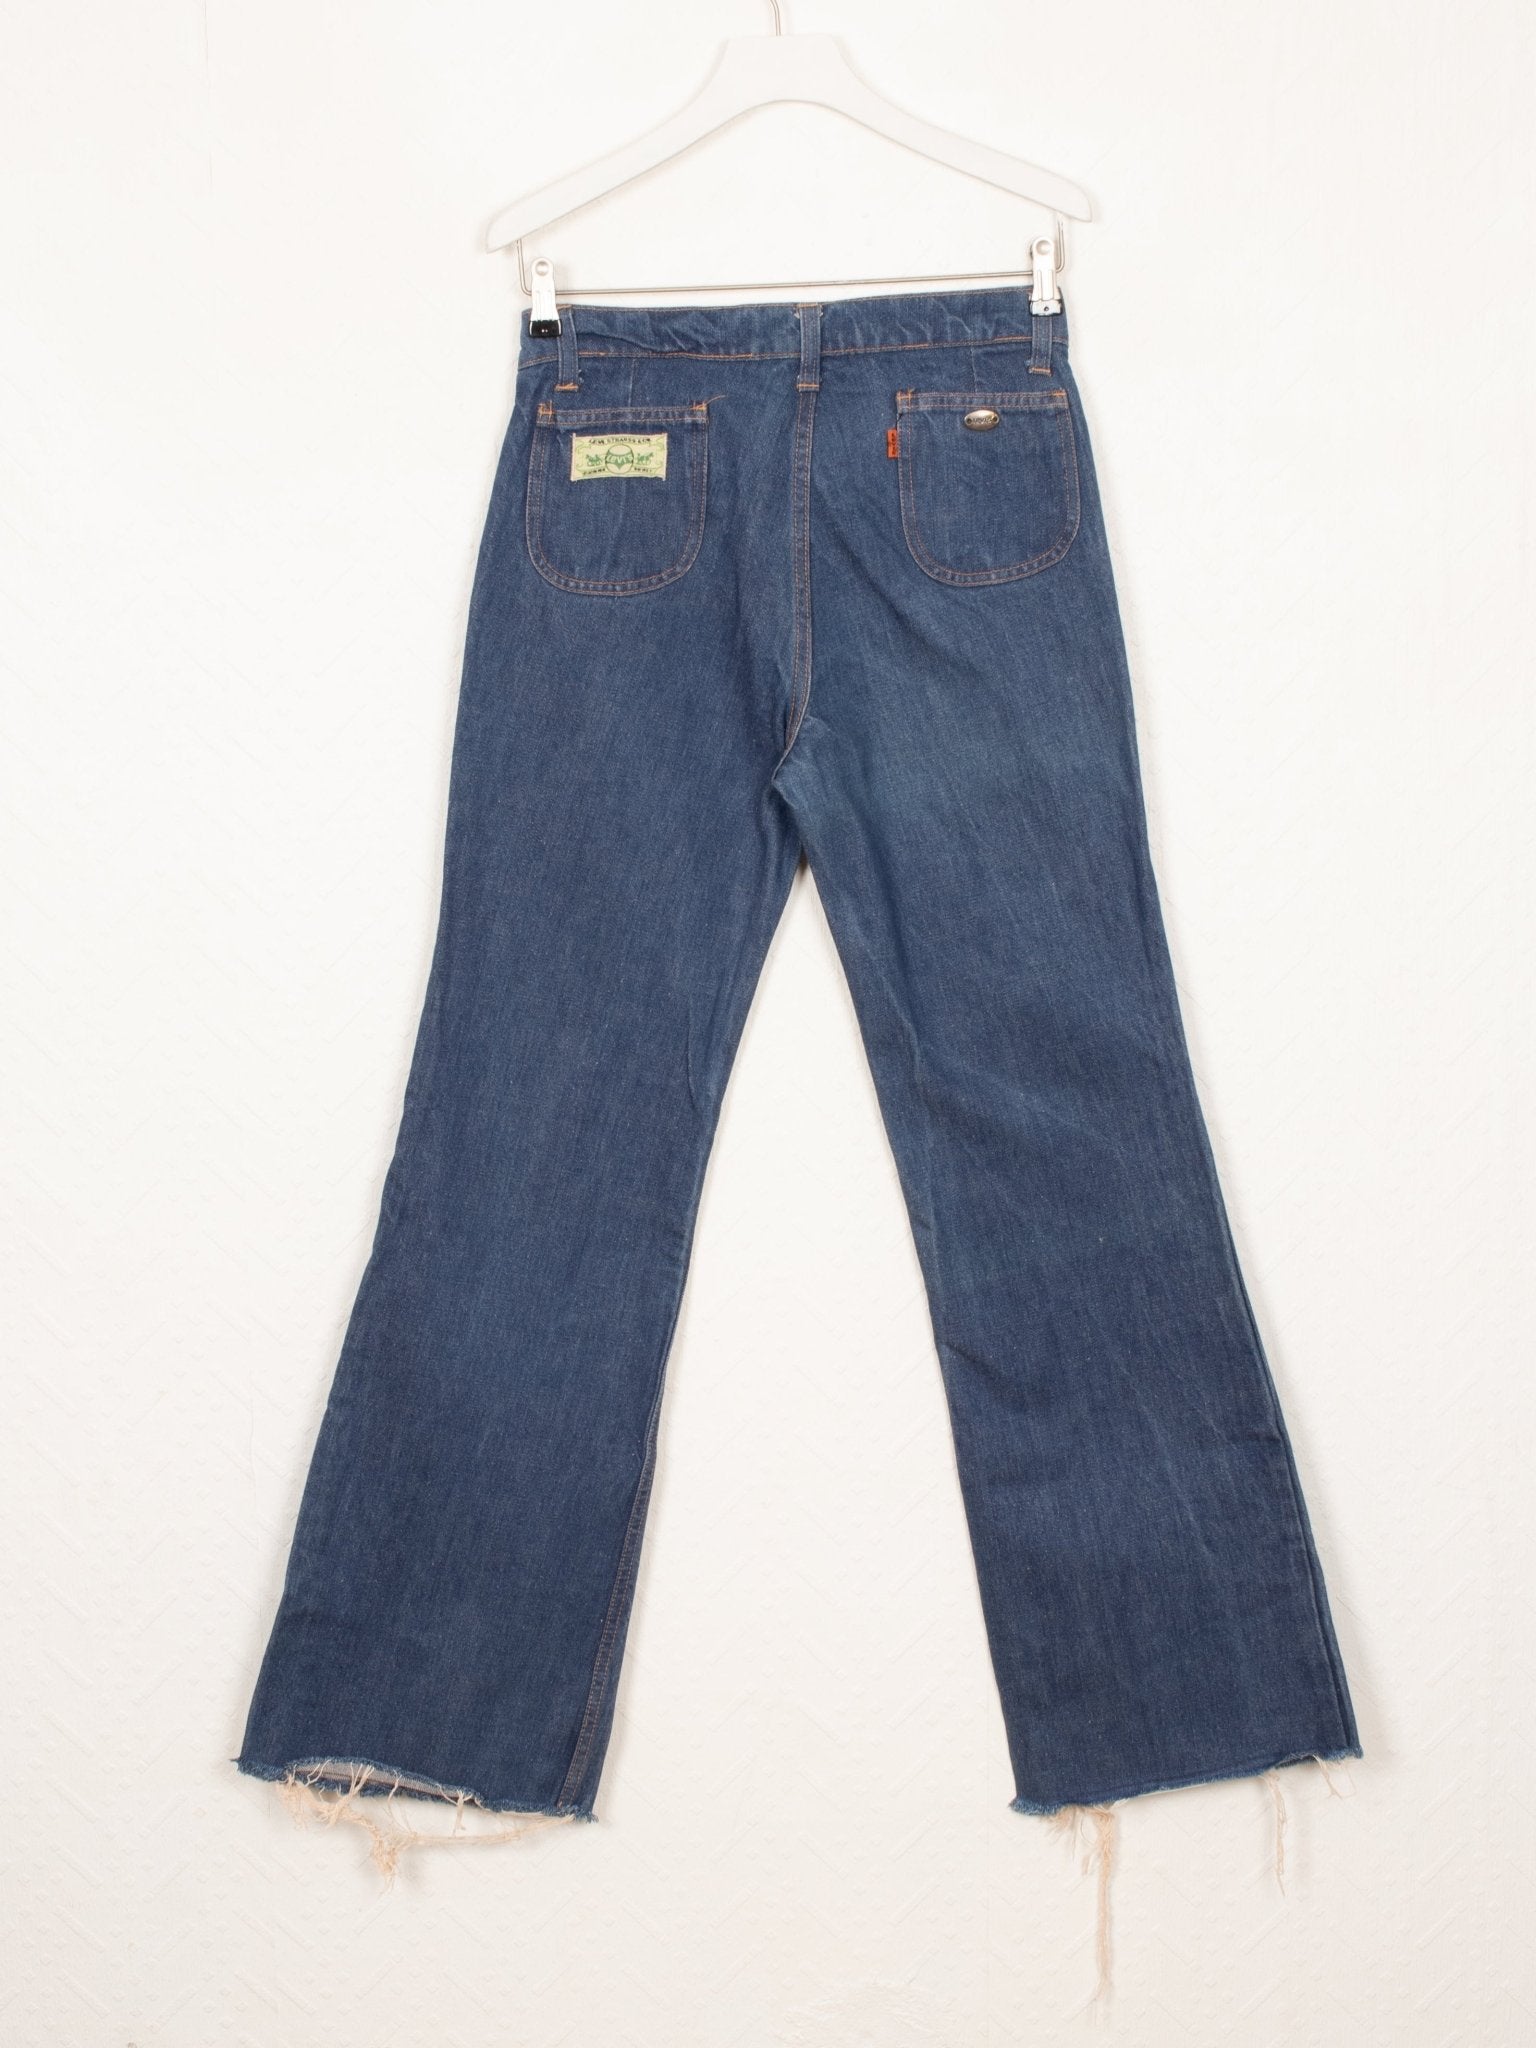 1970s Levi's Orange Tab Flare Jeans